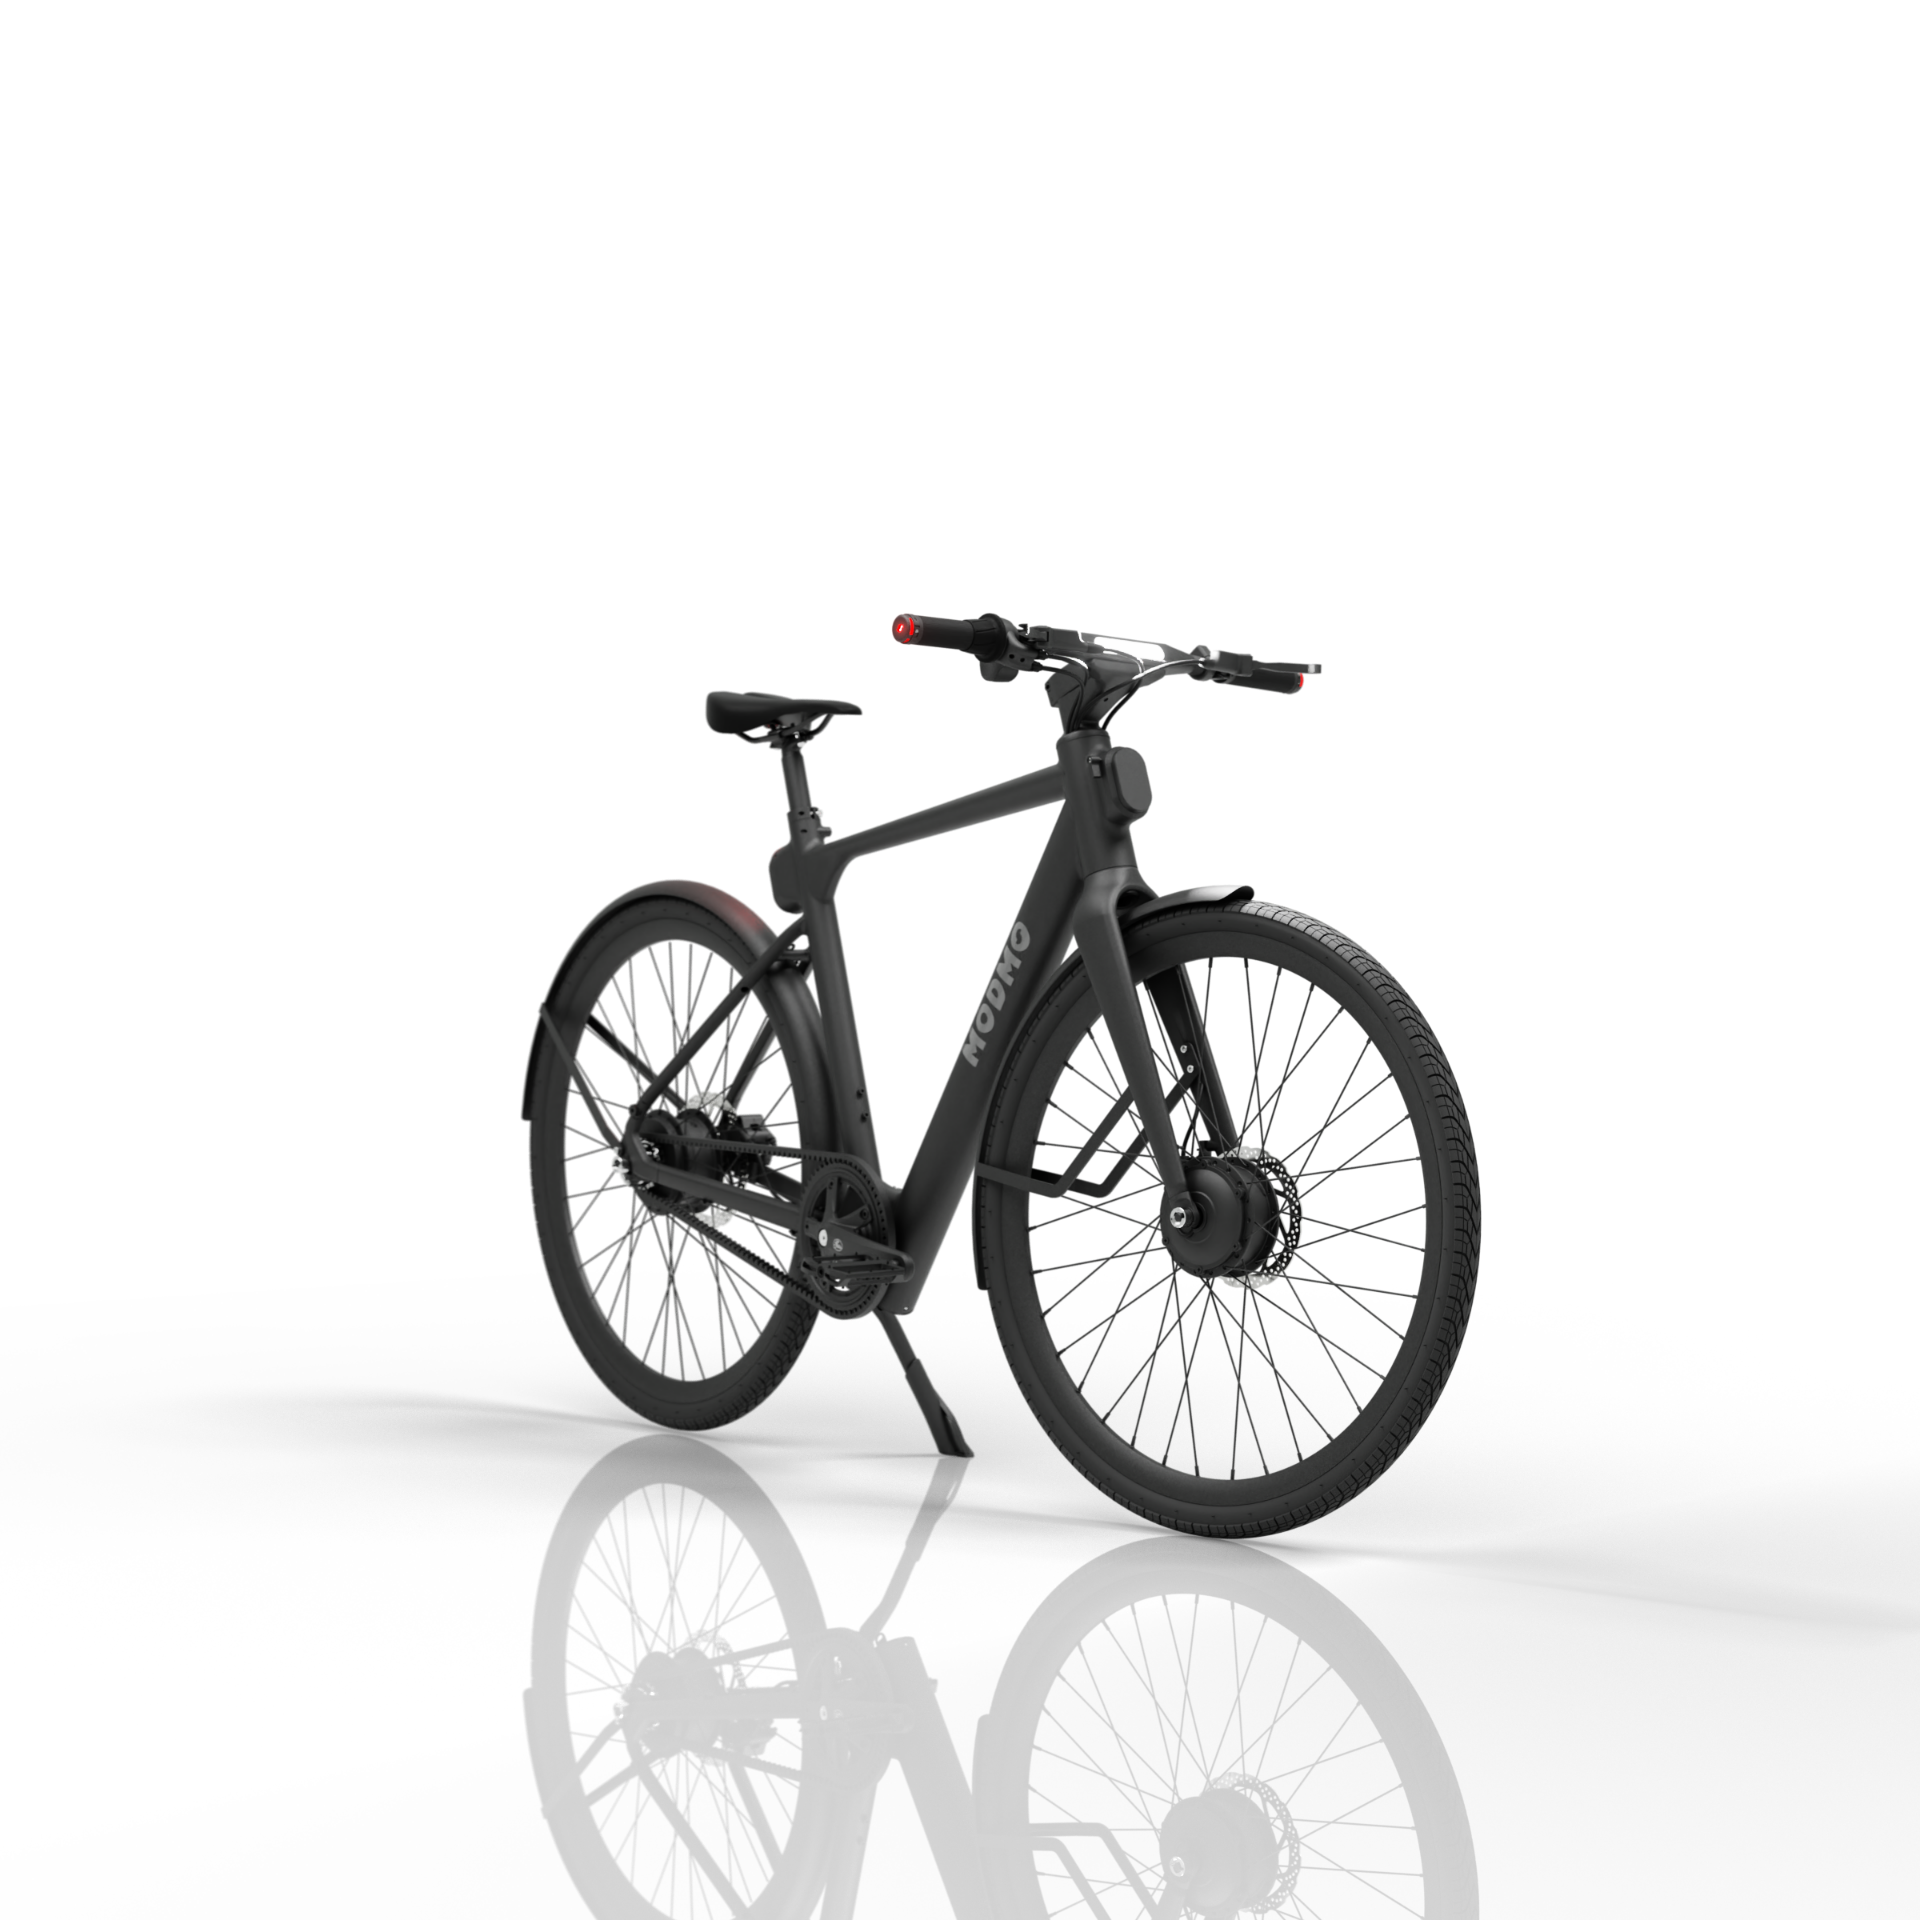 Modmo Saigon+ Electric Bicycle - RRP £2800 - Size L (Rider 175-190cm) - Image 3 of 19